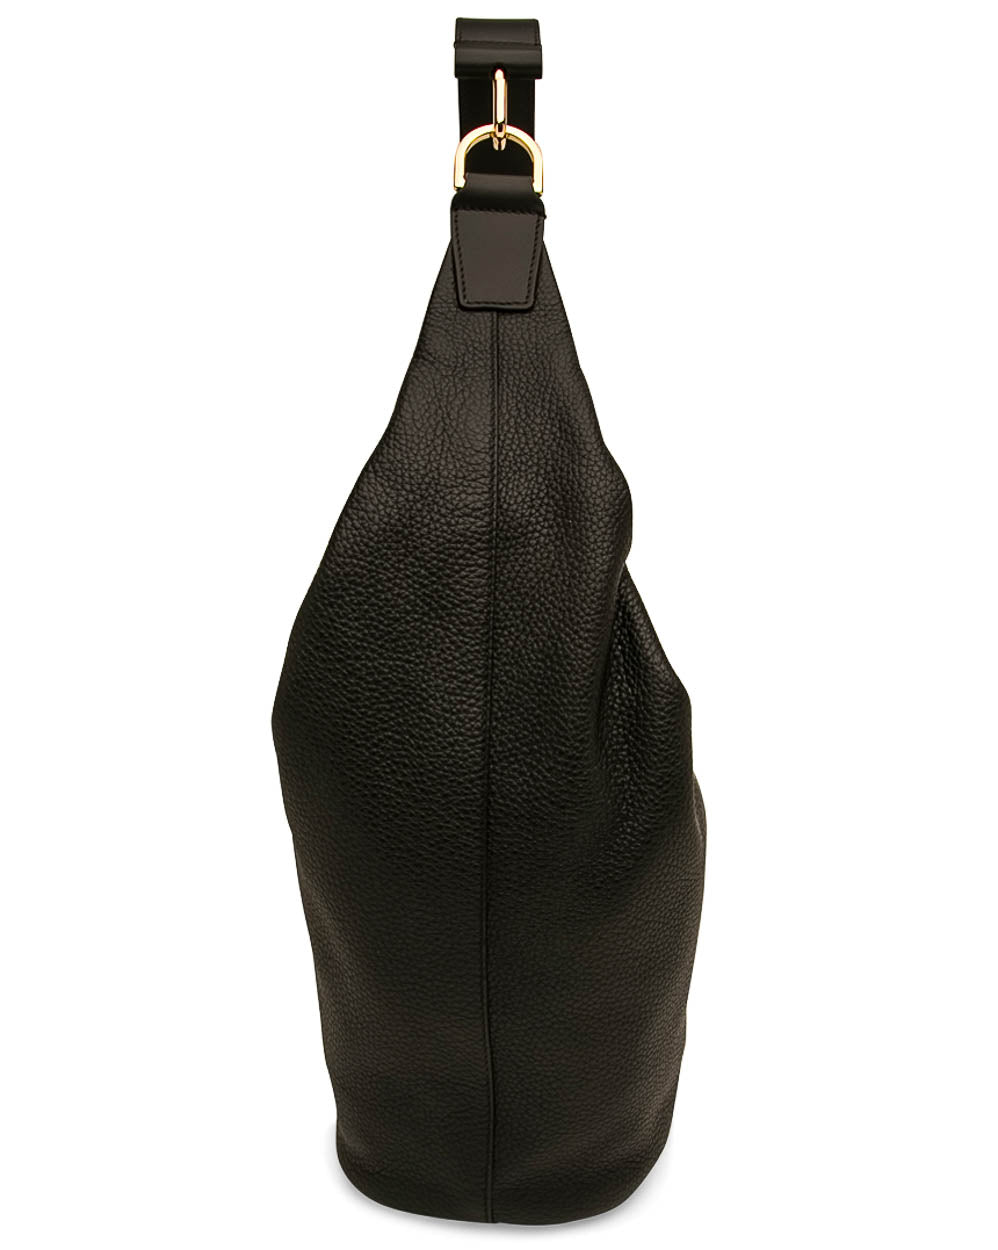 Small Pierce Bag in Black